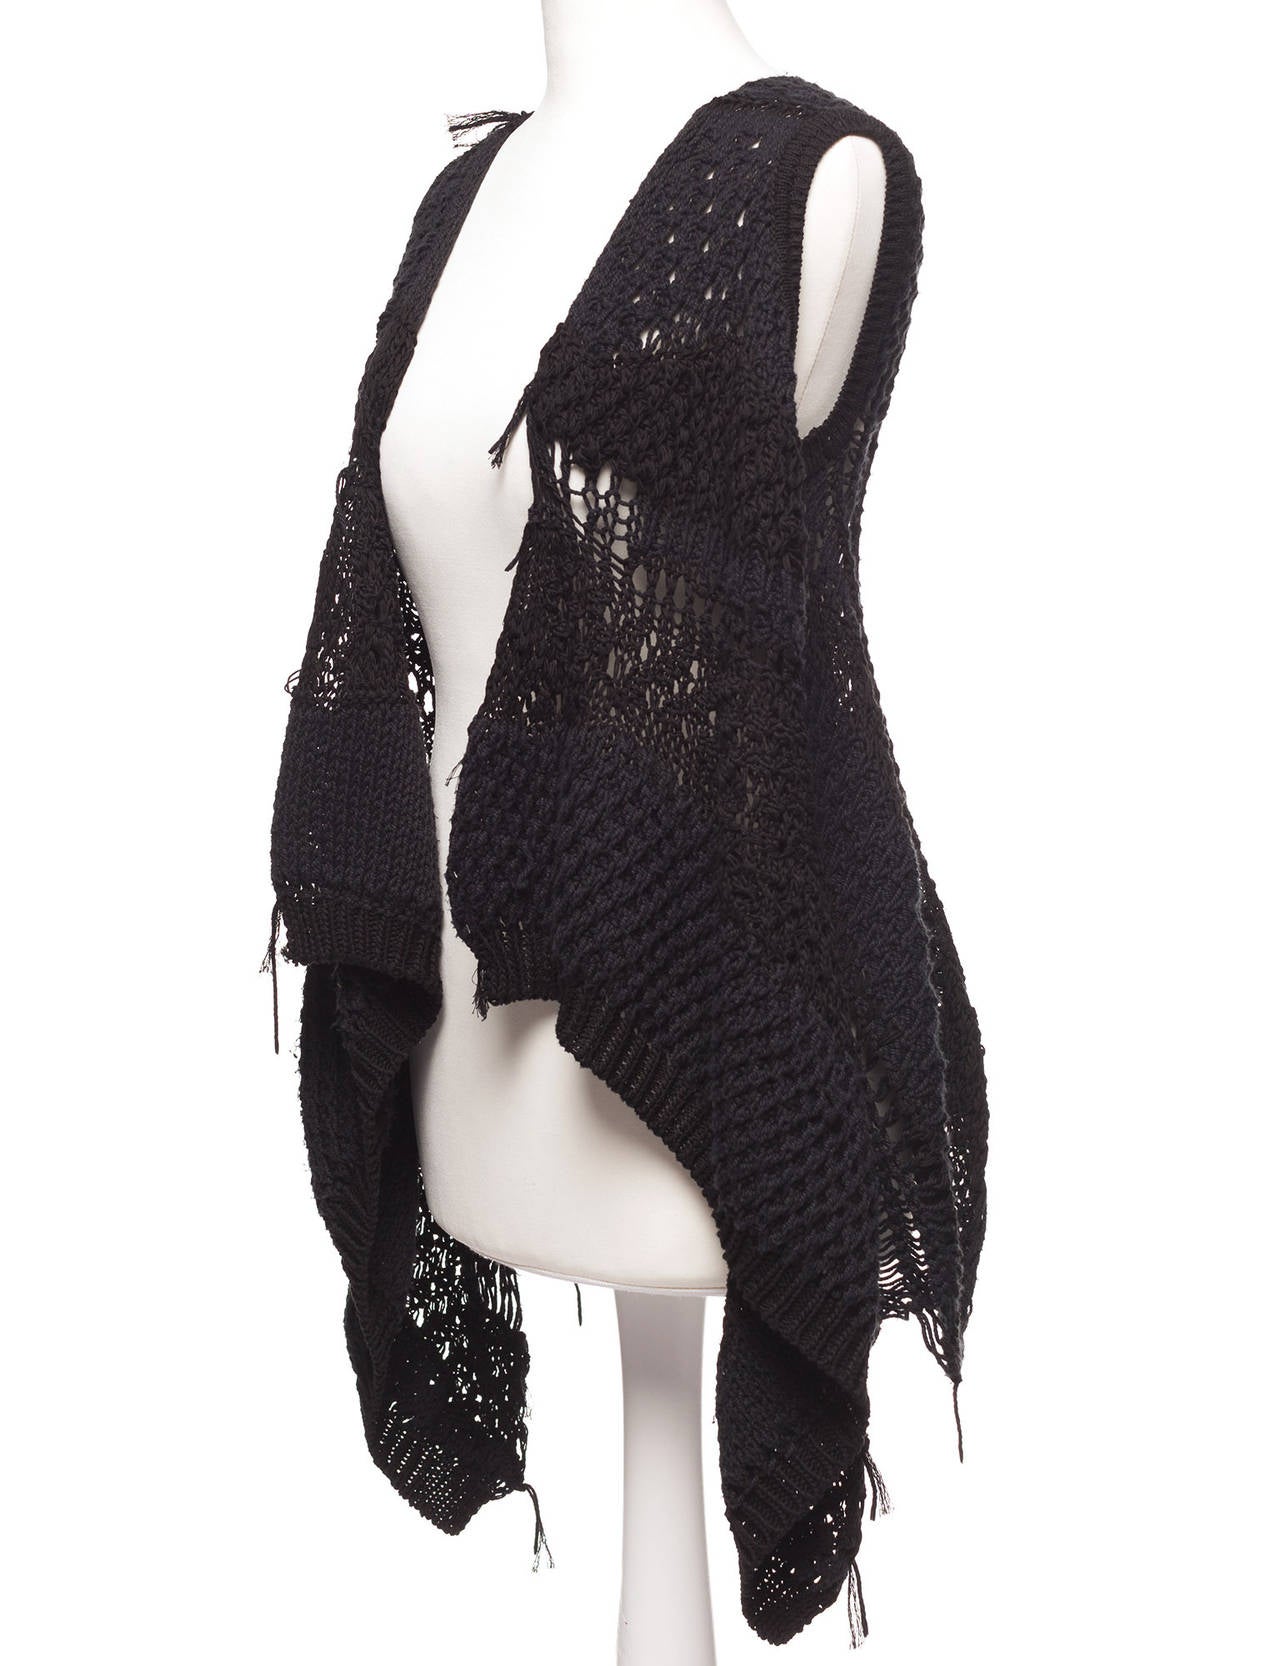 Vest is open crochet with draped asymmetric front, shorter in back bodice. The knit is an open weave.